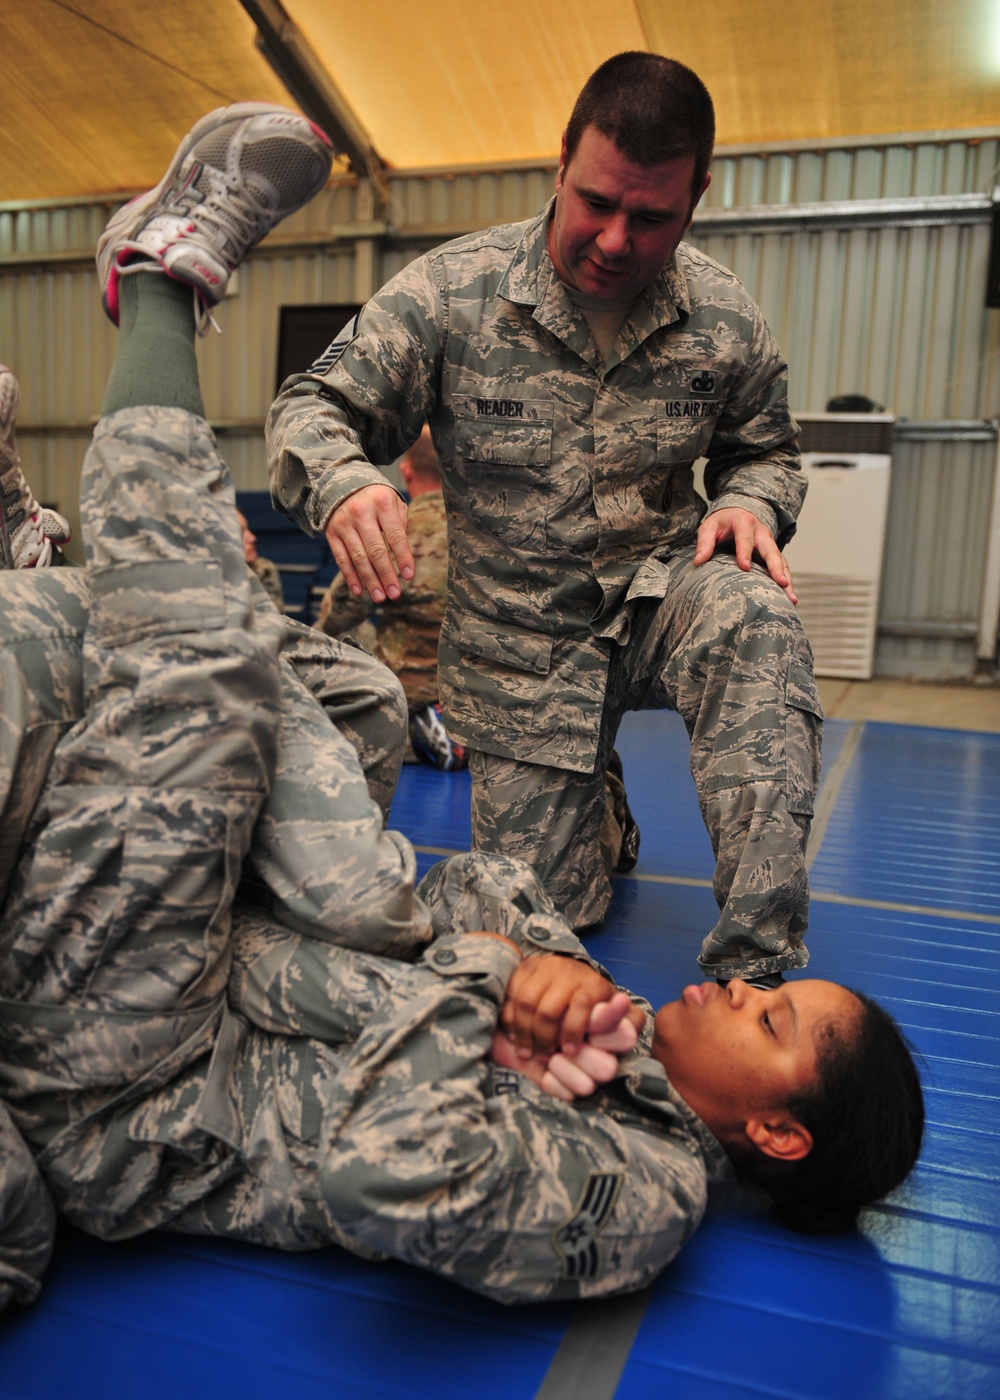 Air Force combatives teaches self-defense